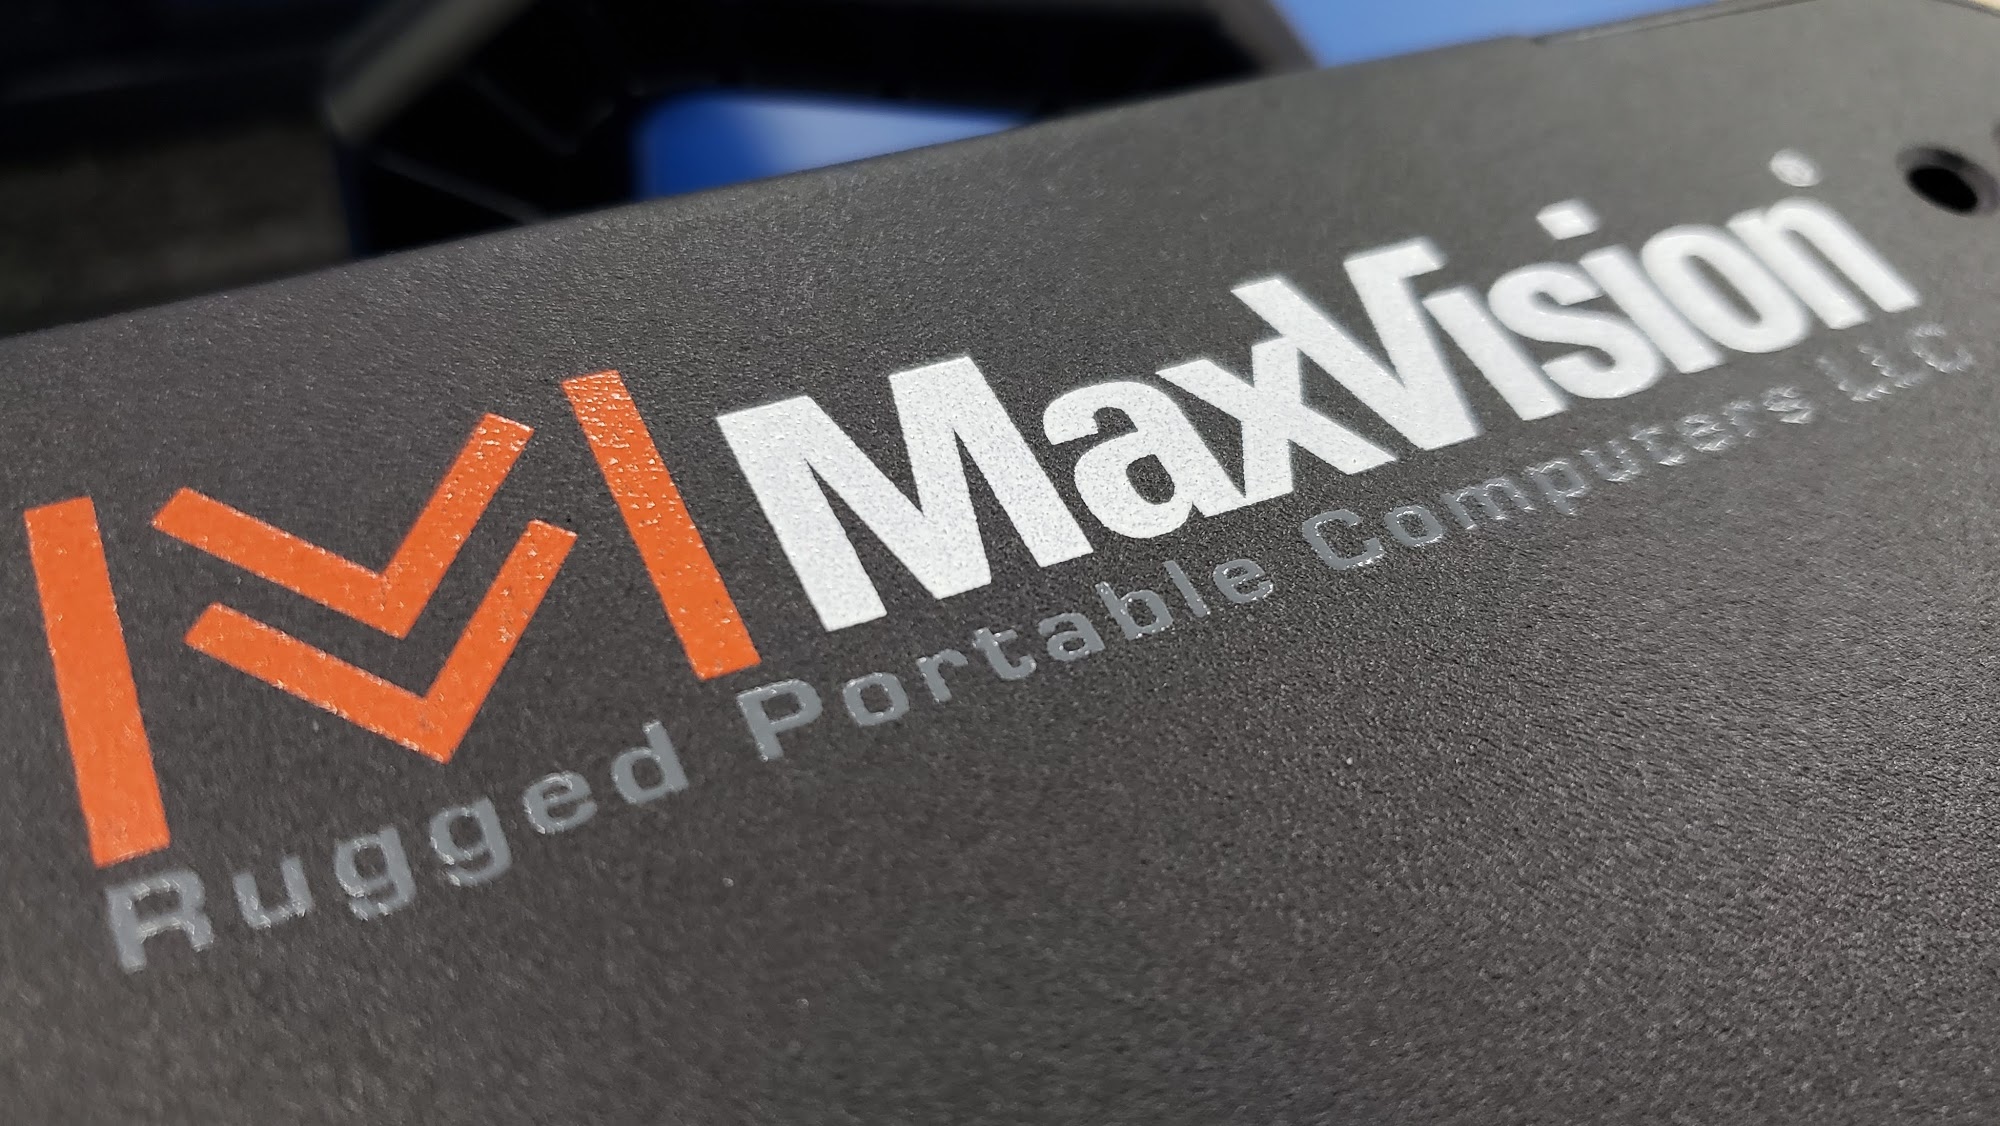 MaxVision, Rugged Portable Computers LLC